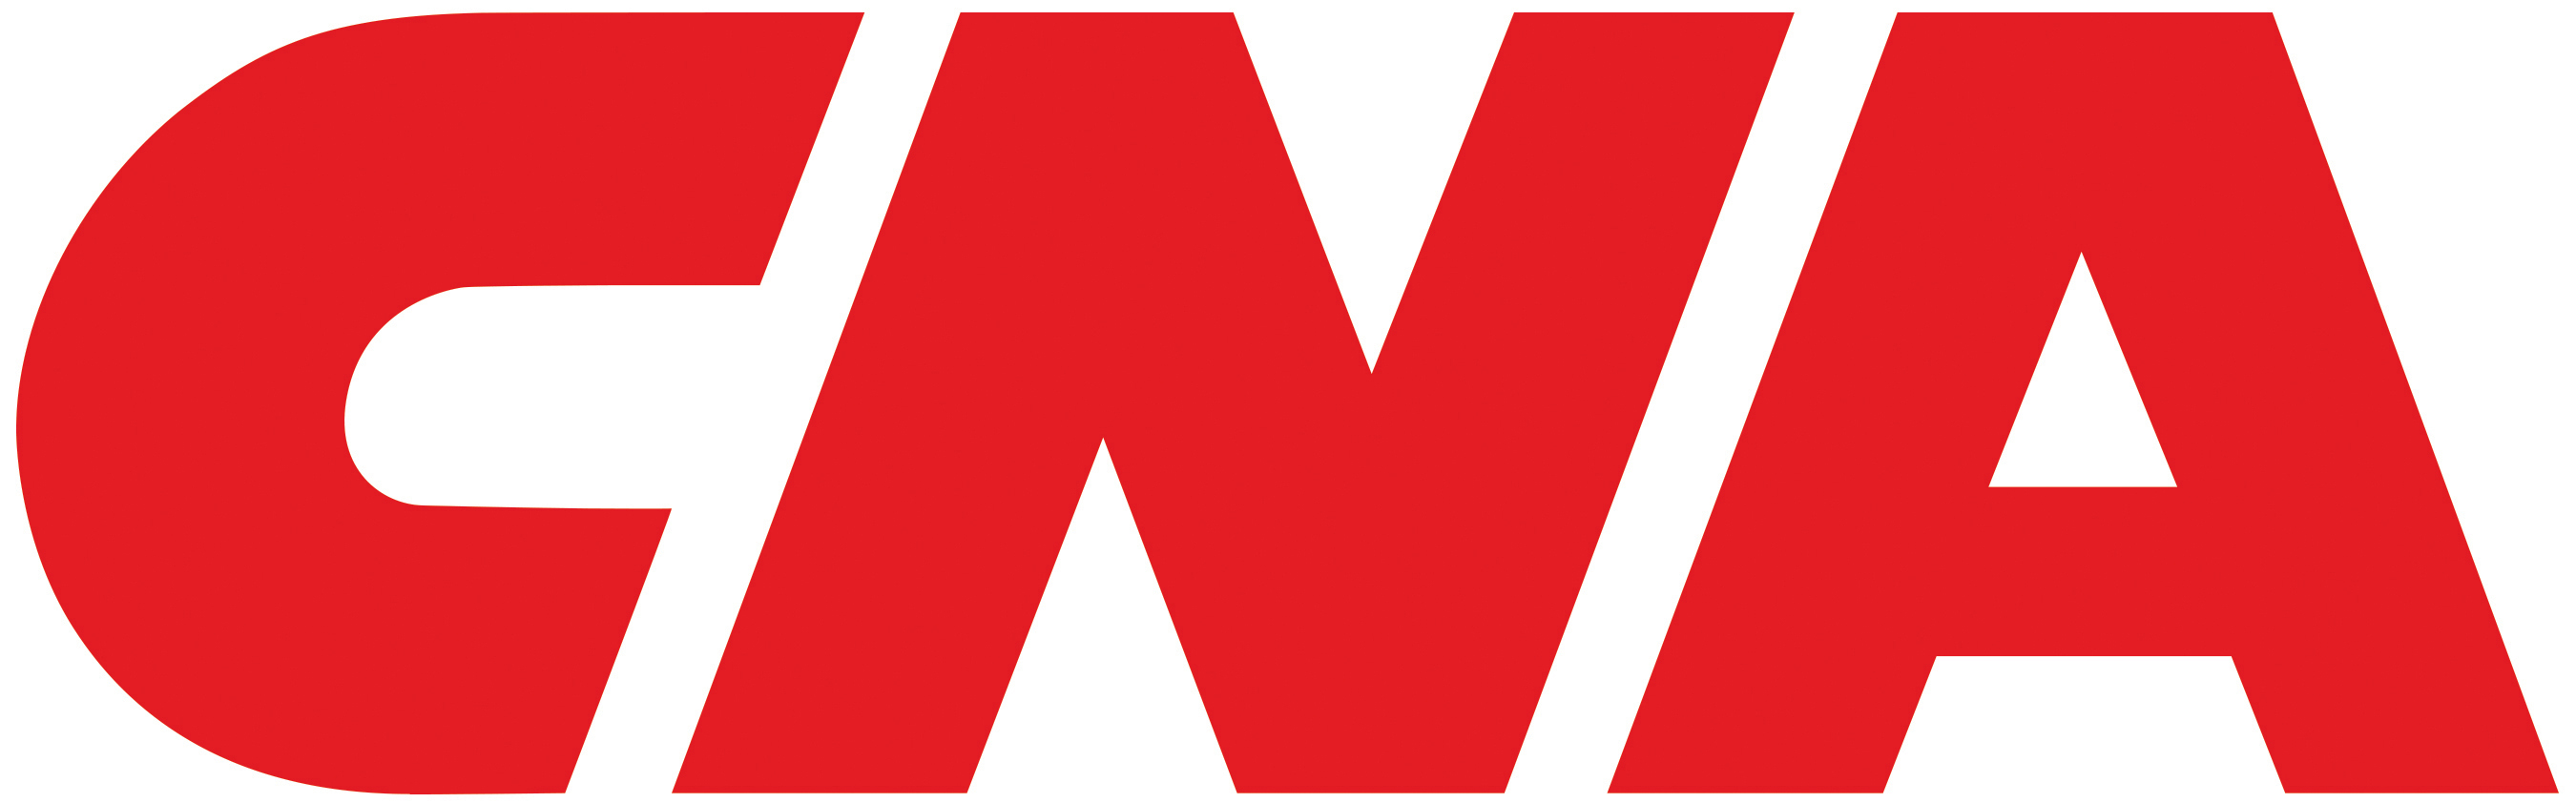 cna Logo photo - 1